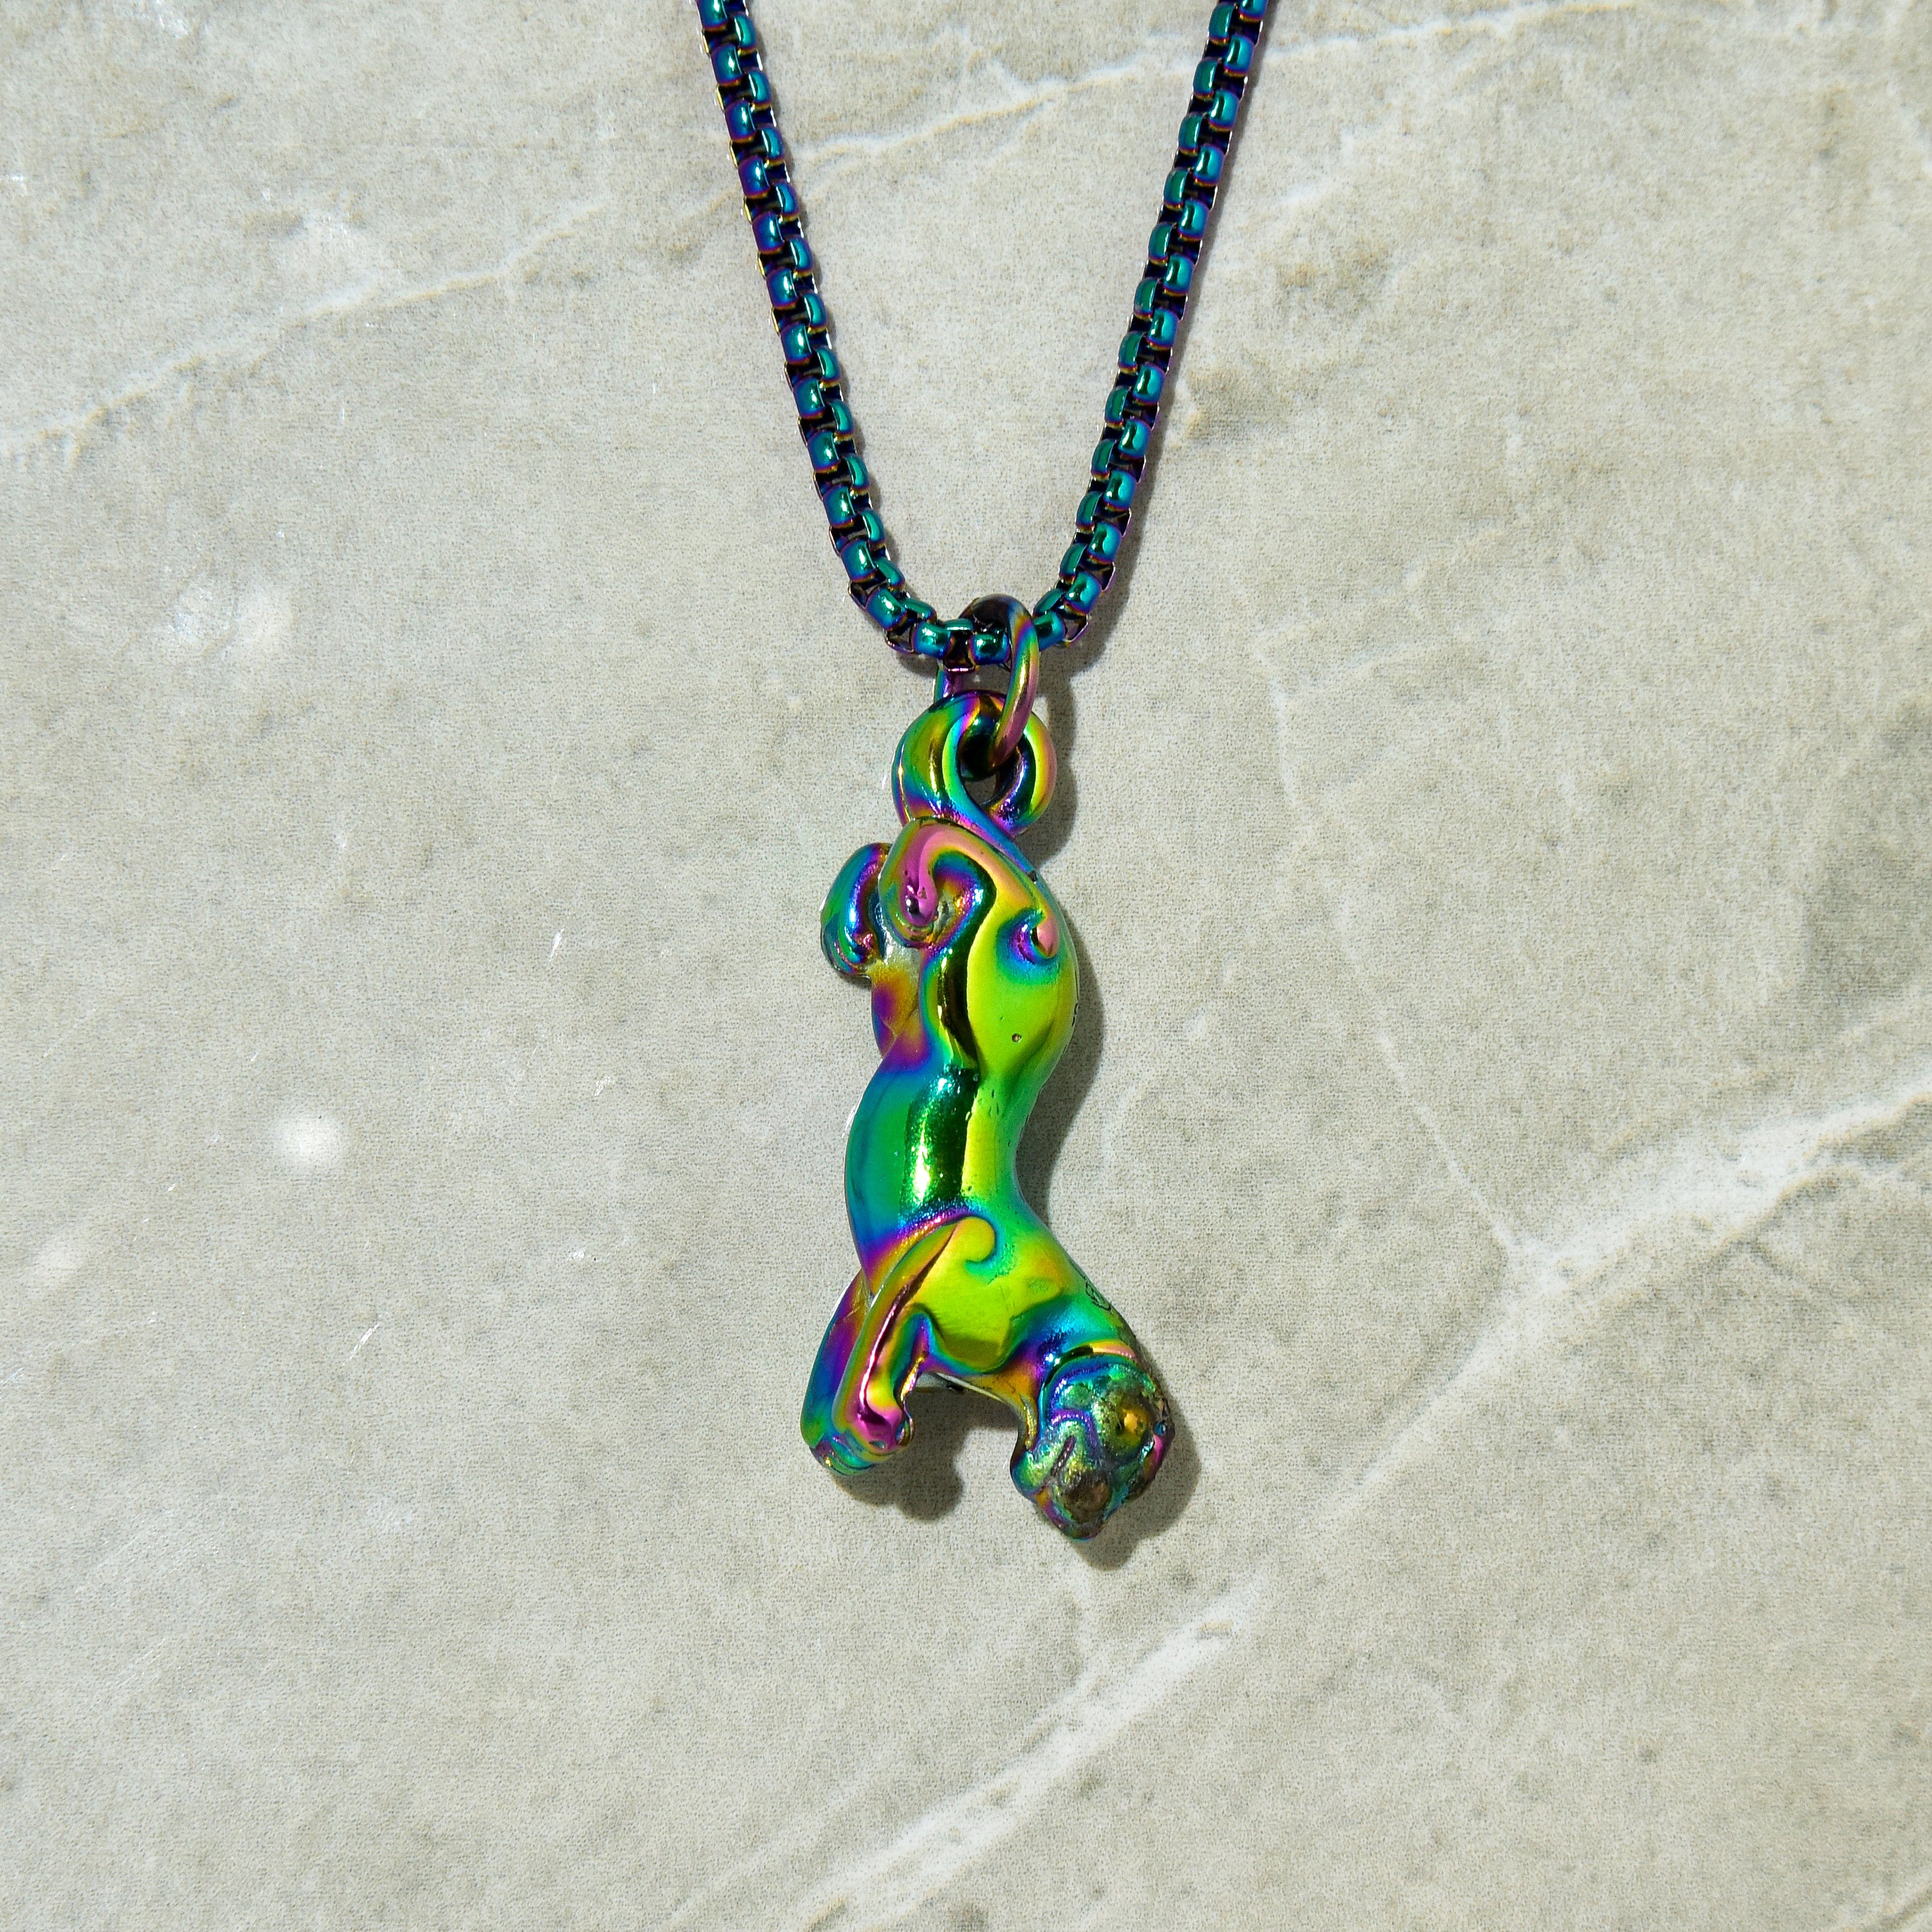 Kalifano Steel Hearts Jewelry Aurora Borealis Jaguar Steel Hearts Necklace SHN519-AB